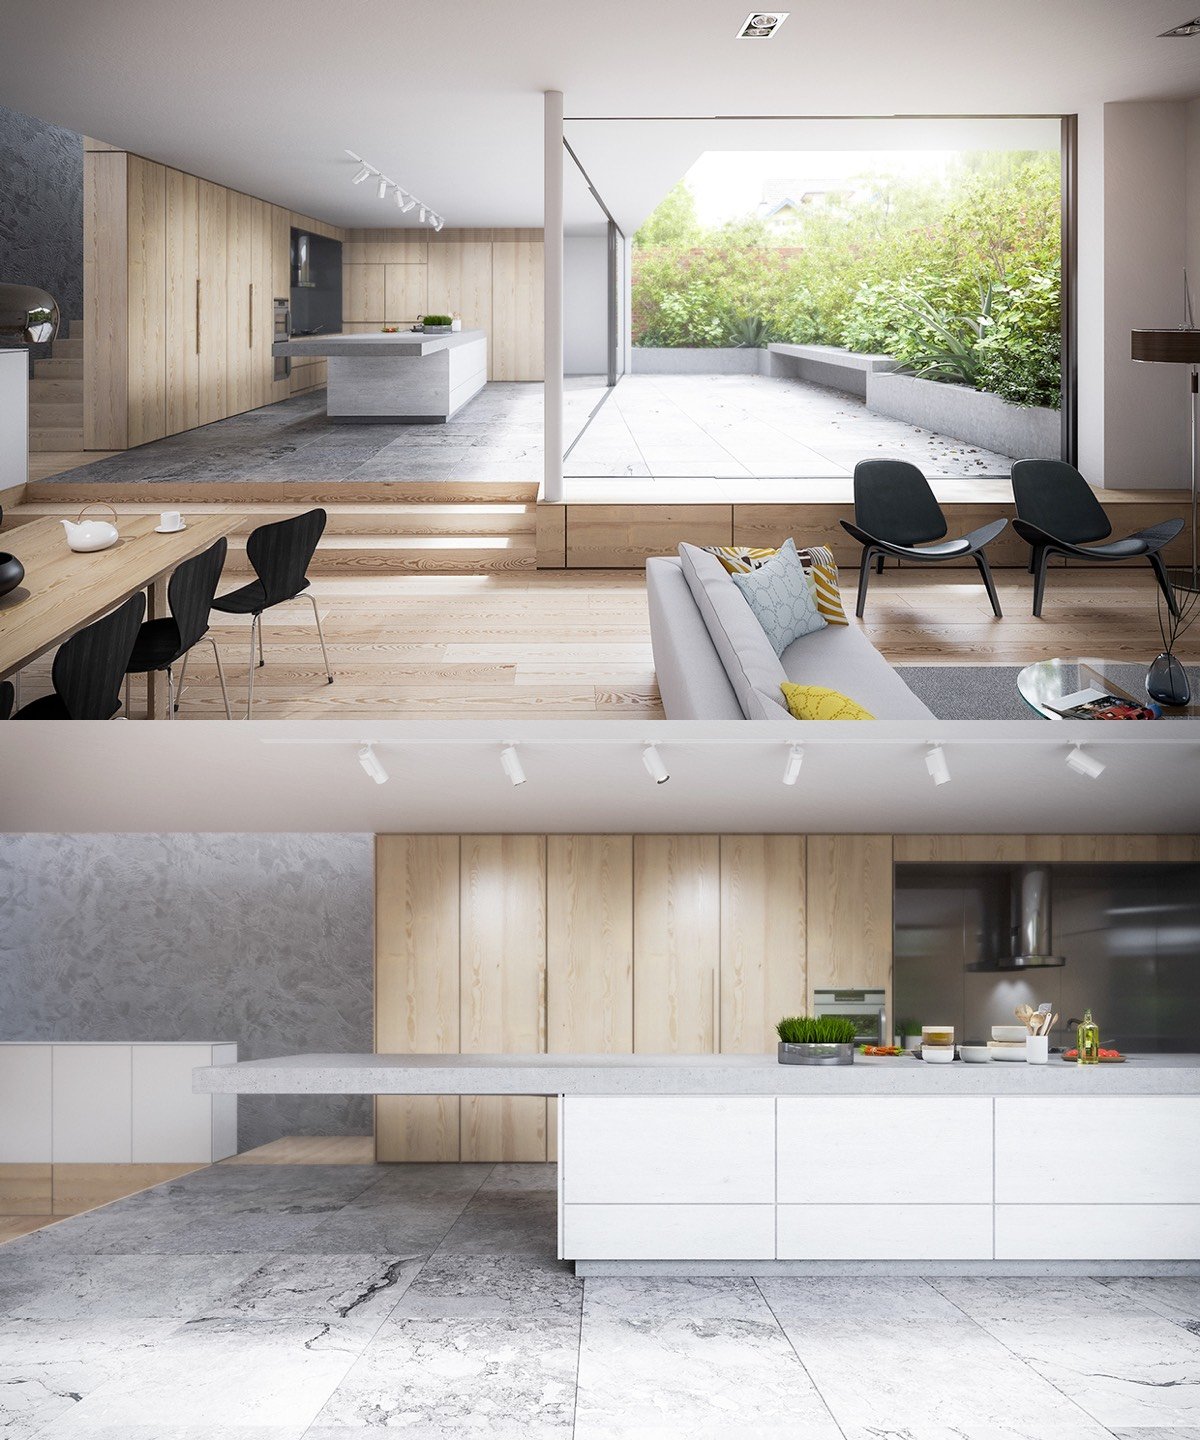 White kitchen design ideas "width =" 1200 "height =" 1440 "srcset =" https://mileray.com/wp-content/uploads/2016/05/stone-kitchen-in-all-wood-interior. jpg 1200w, https://mileray.com/wp-content/uploads/2016/05/stone-kitchen-in-all-wood-interior-250x300.jpg 250w, https://mileray.com/wp-content/ uploads / 2016/05 / Stone kitchen-in-all-wood-interior-768x922.jpg 768w, https://mileray.com/wp-content/uploads/2016/05/stone-kitchen-in-all-wood-interior -853x1024.jpg 853w, https://mileray.com/wp-content/uploads/2016/05/stone-kitchen-in-all-wood-interior-696x835.jpg 696w, https://mileray.com/wp -content / uploads / 2016/05 / stone-kitchen-in-all-wood-interior-1068x1282.jpg 1068w, https://mileray.com/wp-content/uploads/2016/05/stone-kitchen-in- All-Wood-Interieur-350x420.jpg 350w "sizes =" (maximum width: 1200px) 100vw, 1200px